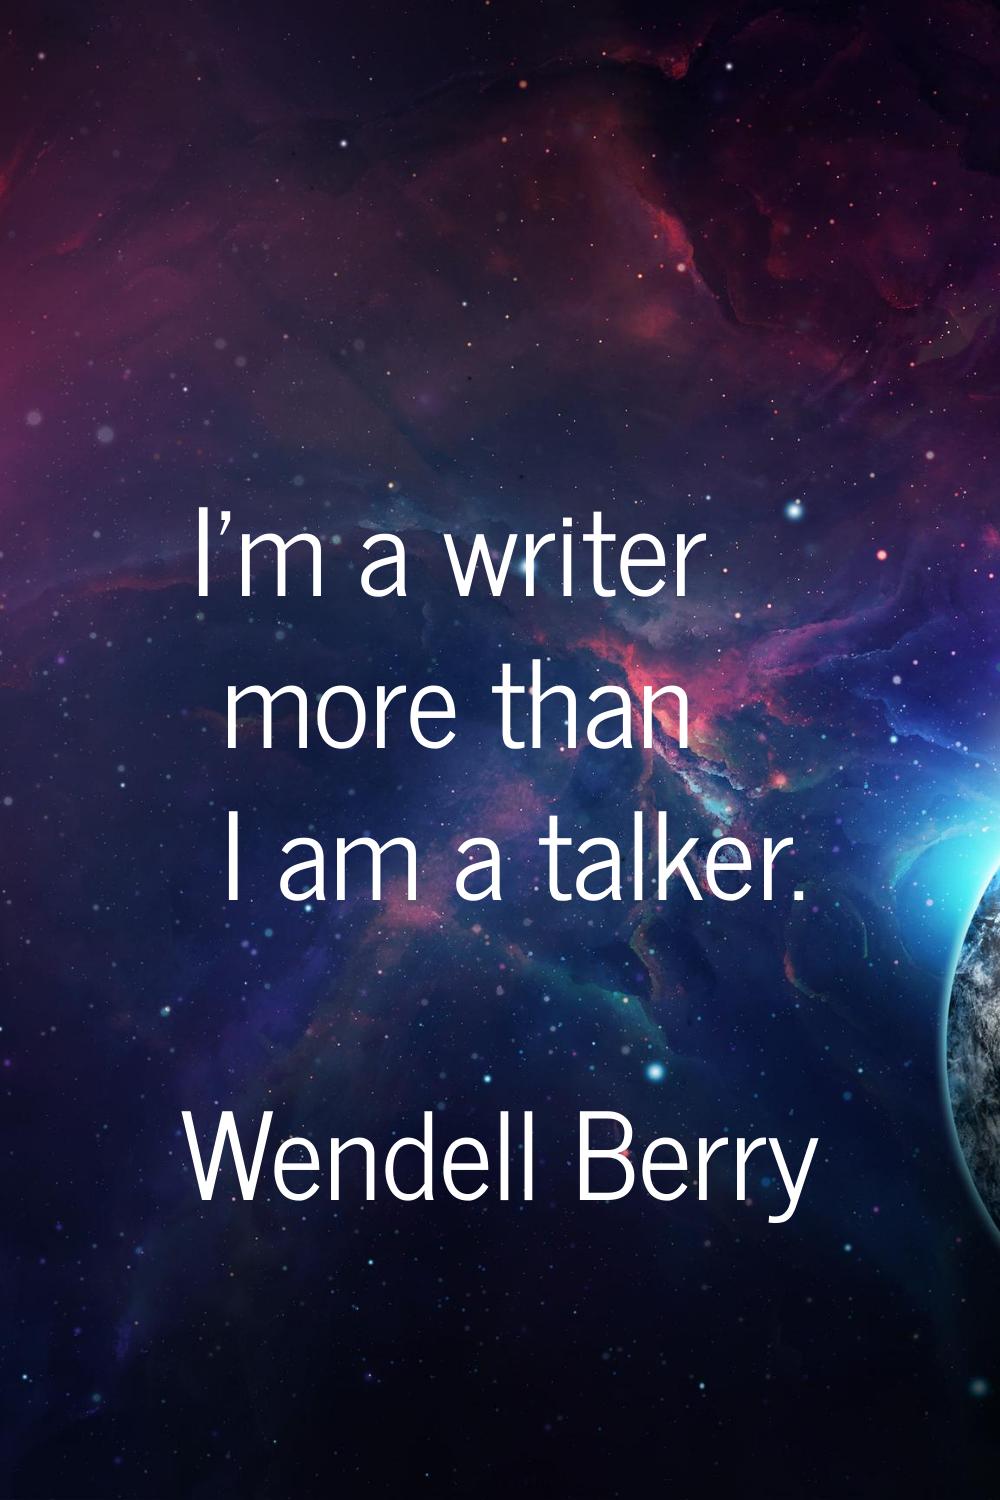 I'm a writer more than I am a talker.